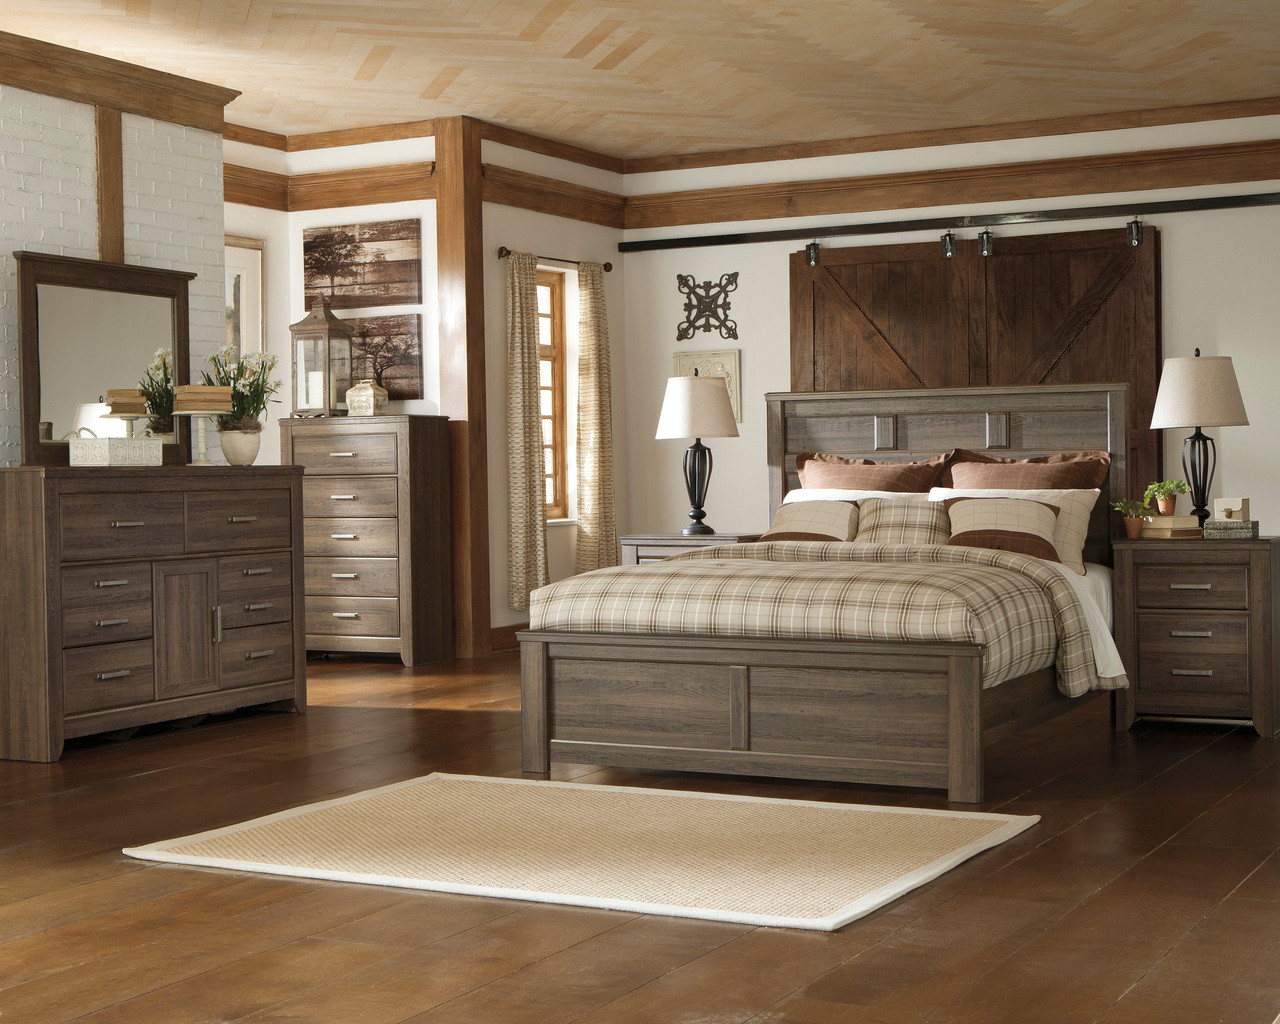 hacienda style bedroom furniture